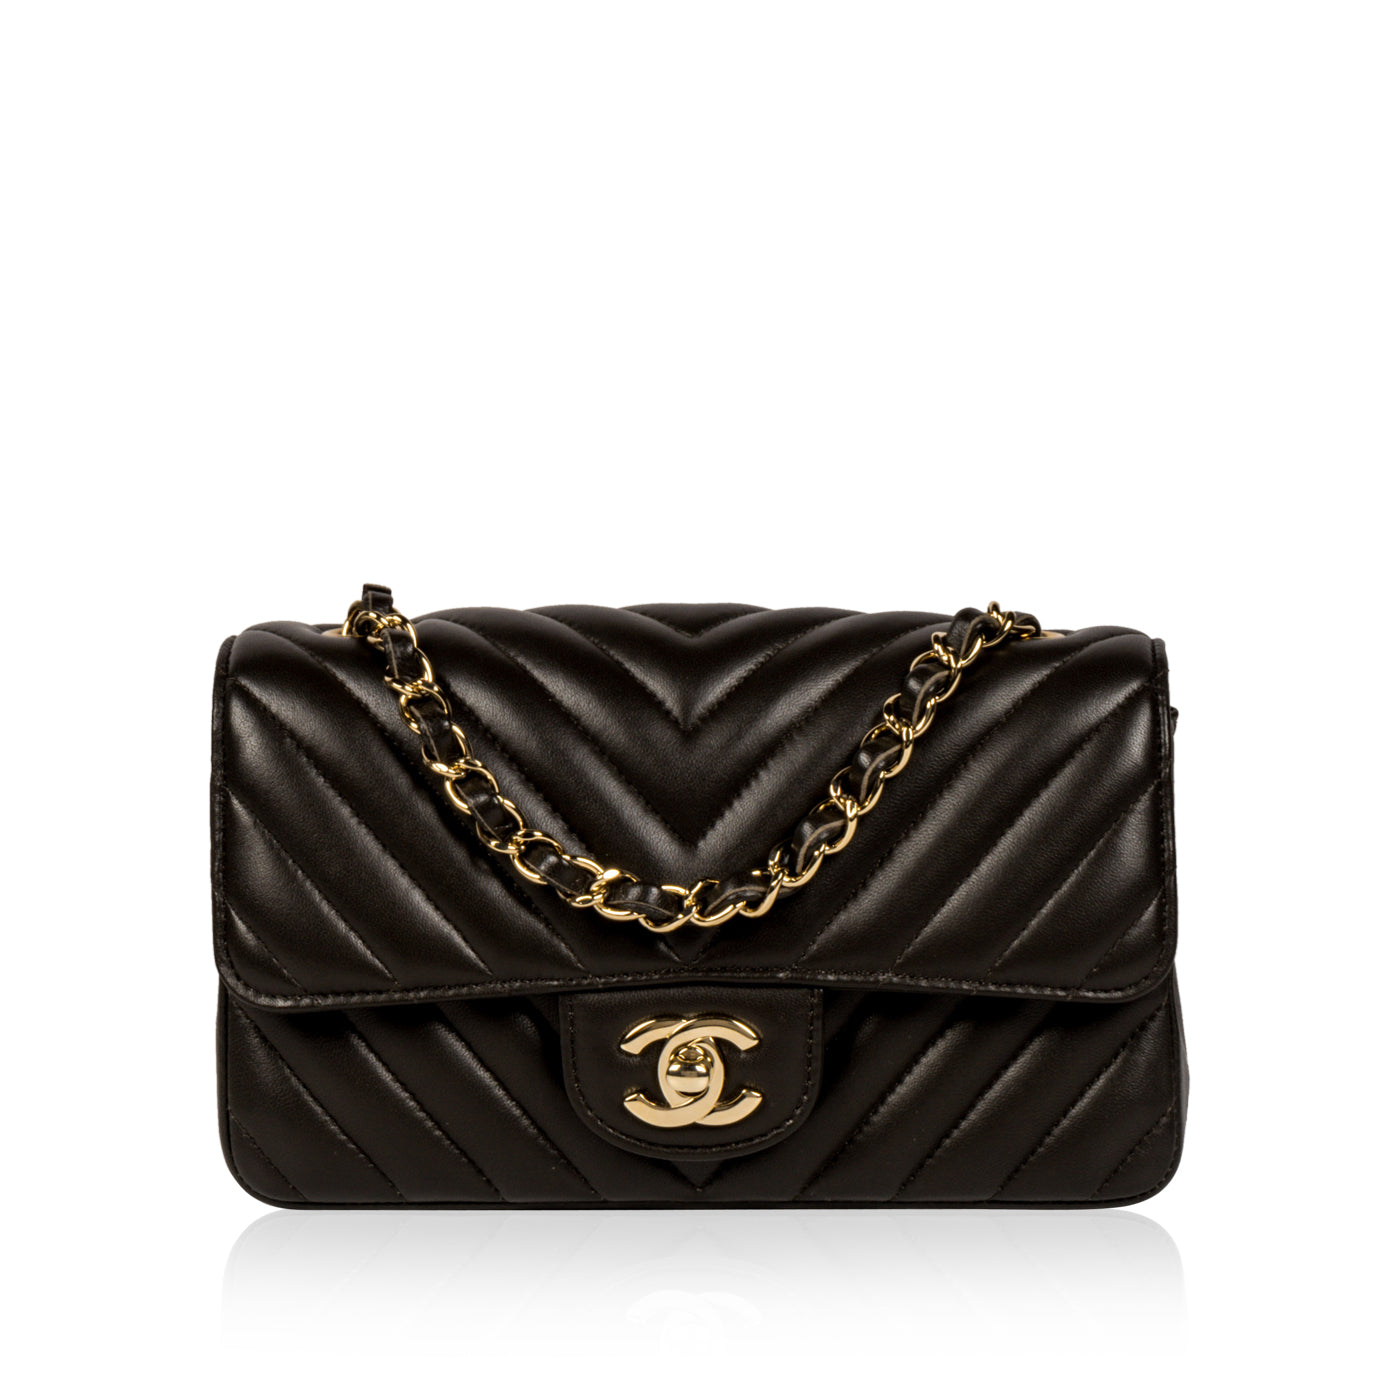 Chanel - Classic Flap Bag - Mini Rectangular - Dark Brown - SHW